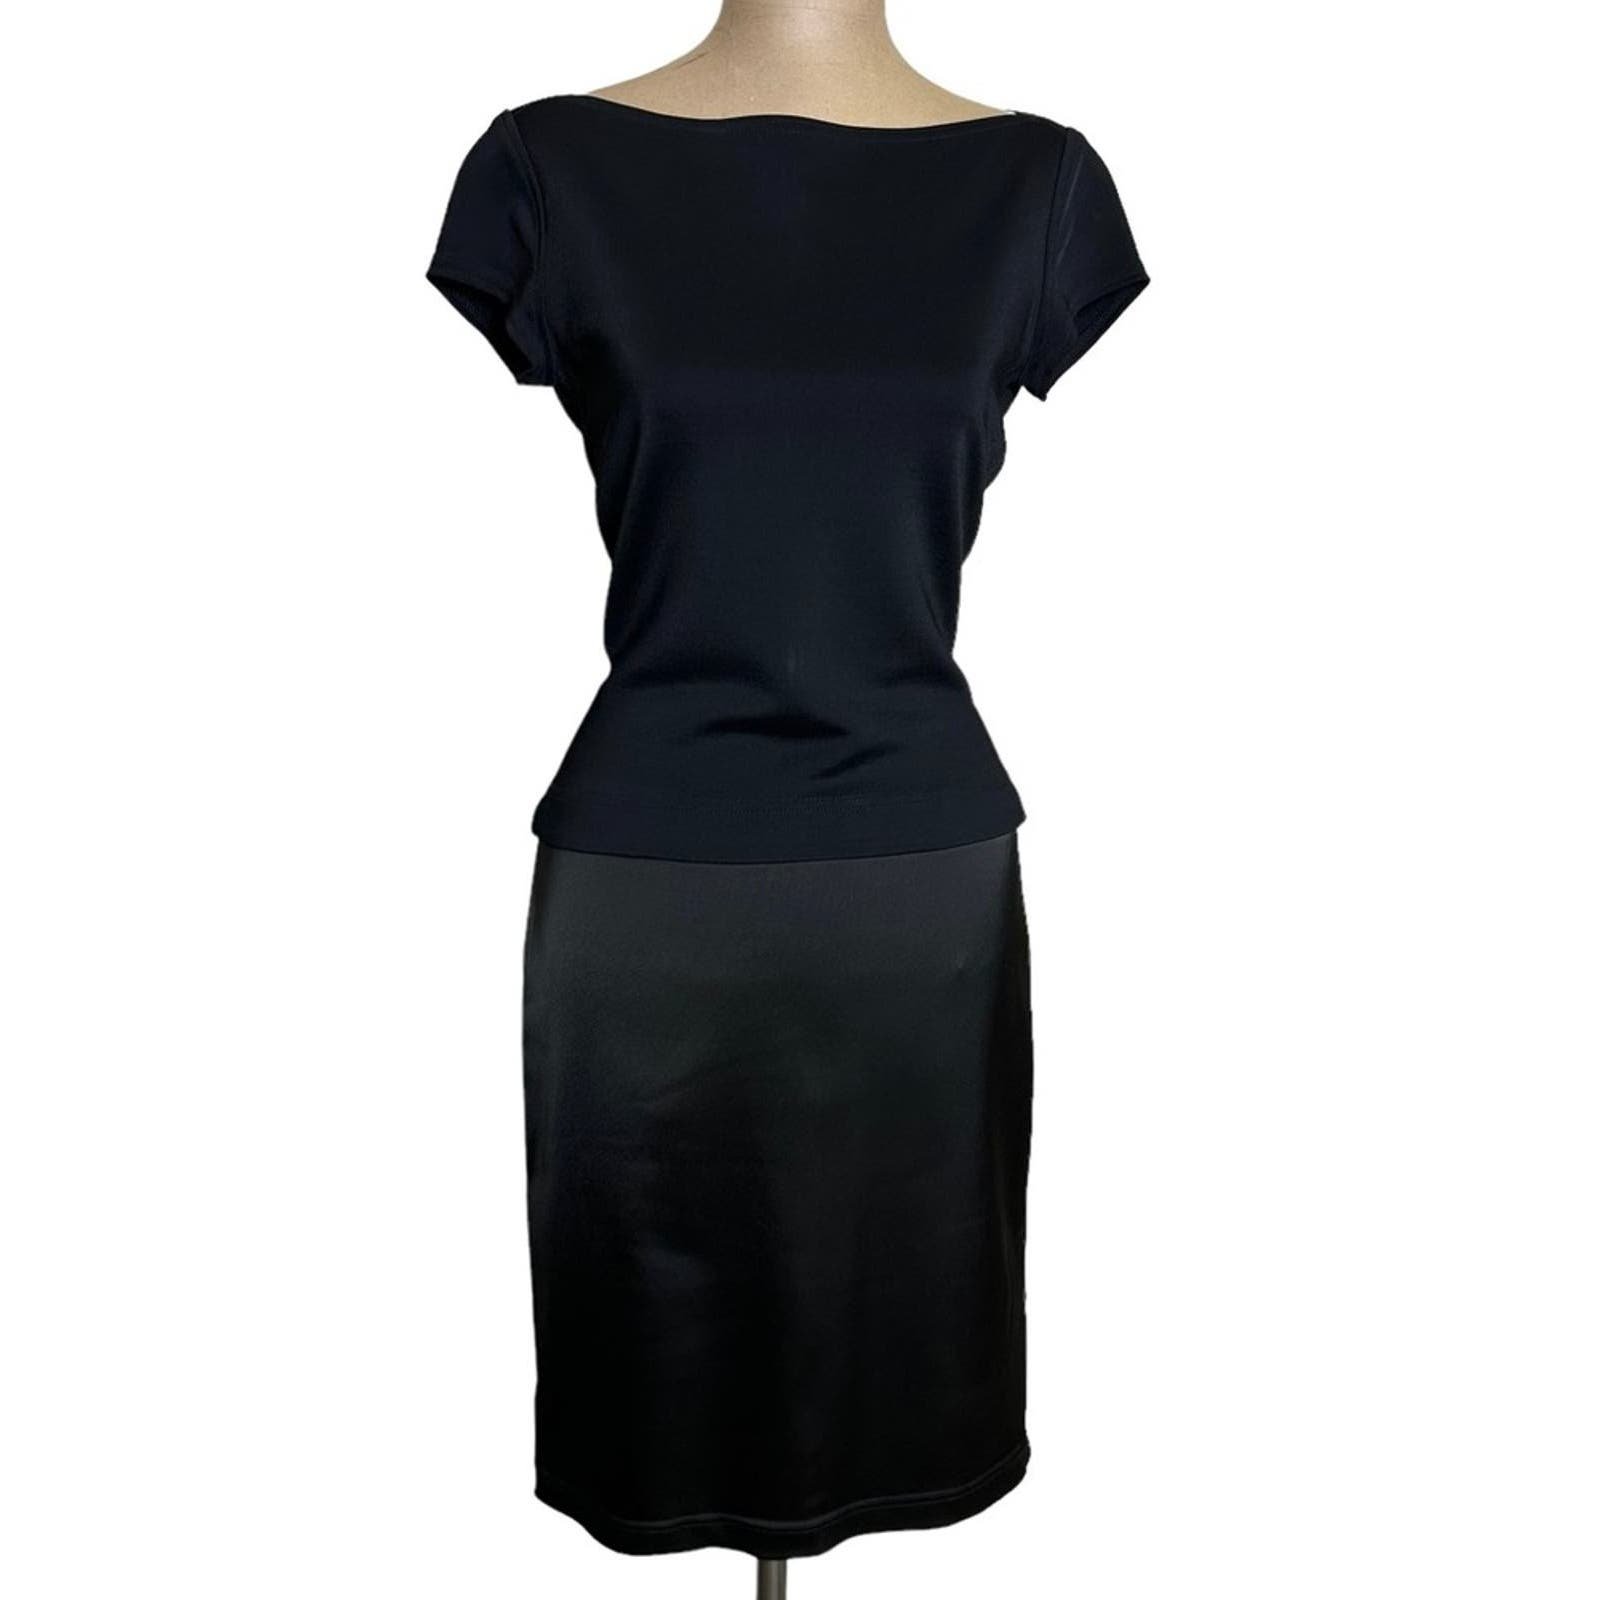 the Lowest price Tadashi vintage contrast black satin dress size 6 gi3zD7v8H no tax